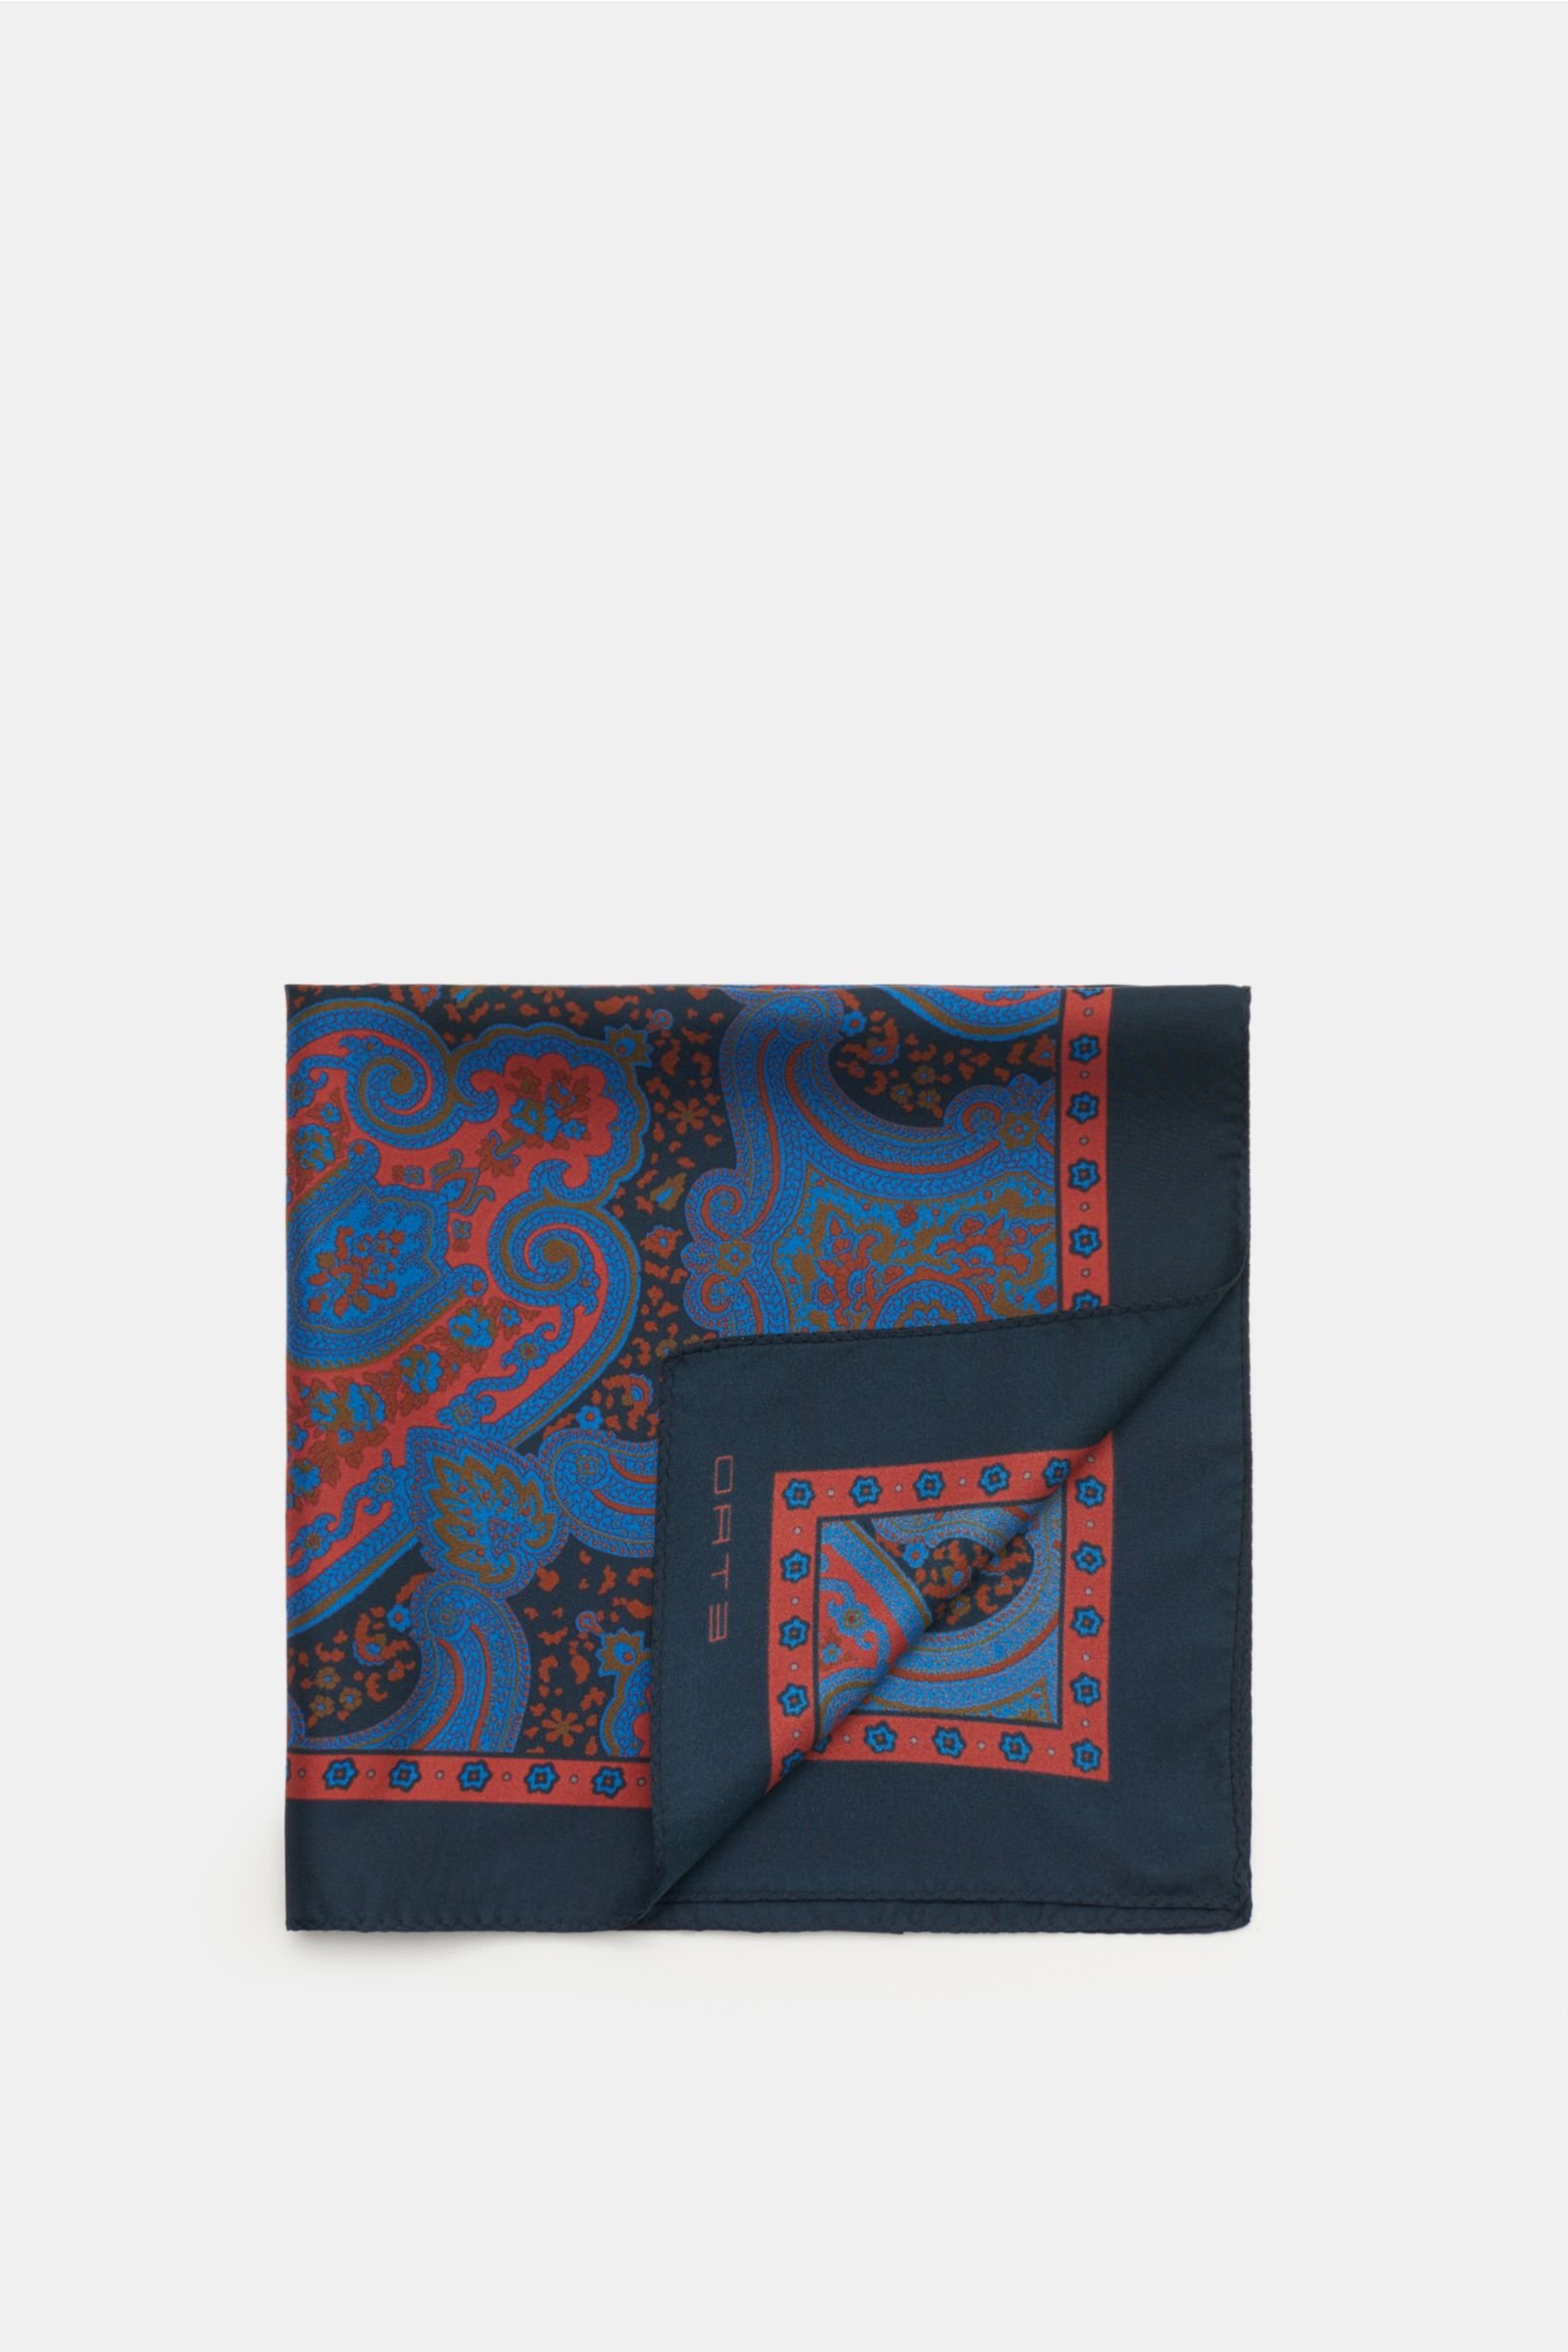 Pocket square navy/blue/red patterned